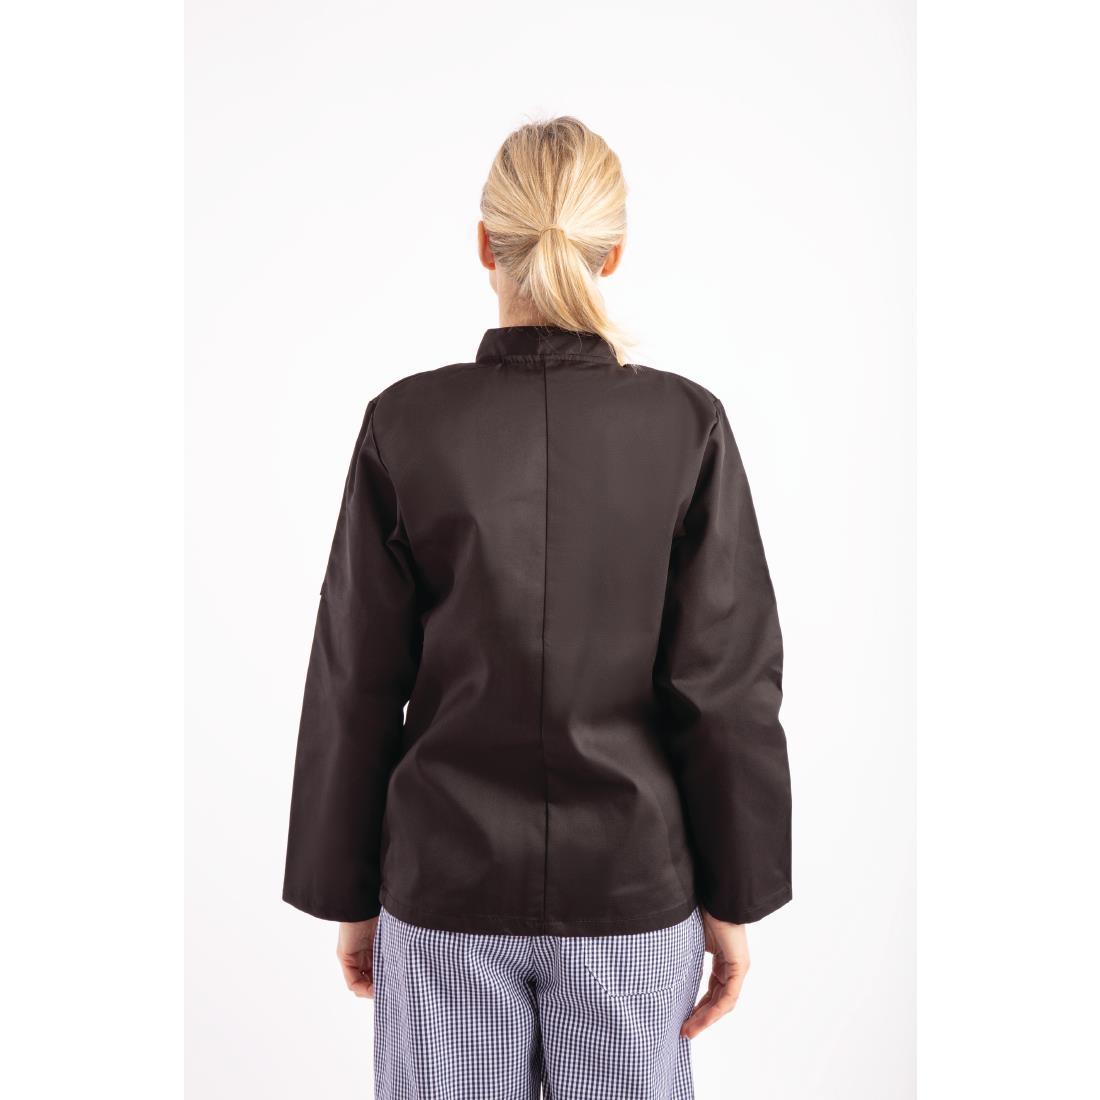 Whites Vegas Unisex Chefs Jacket Long Sleeve Black L - A438-L  - 10